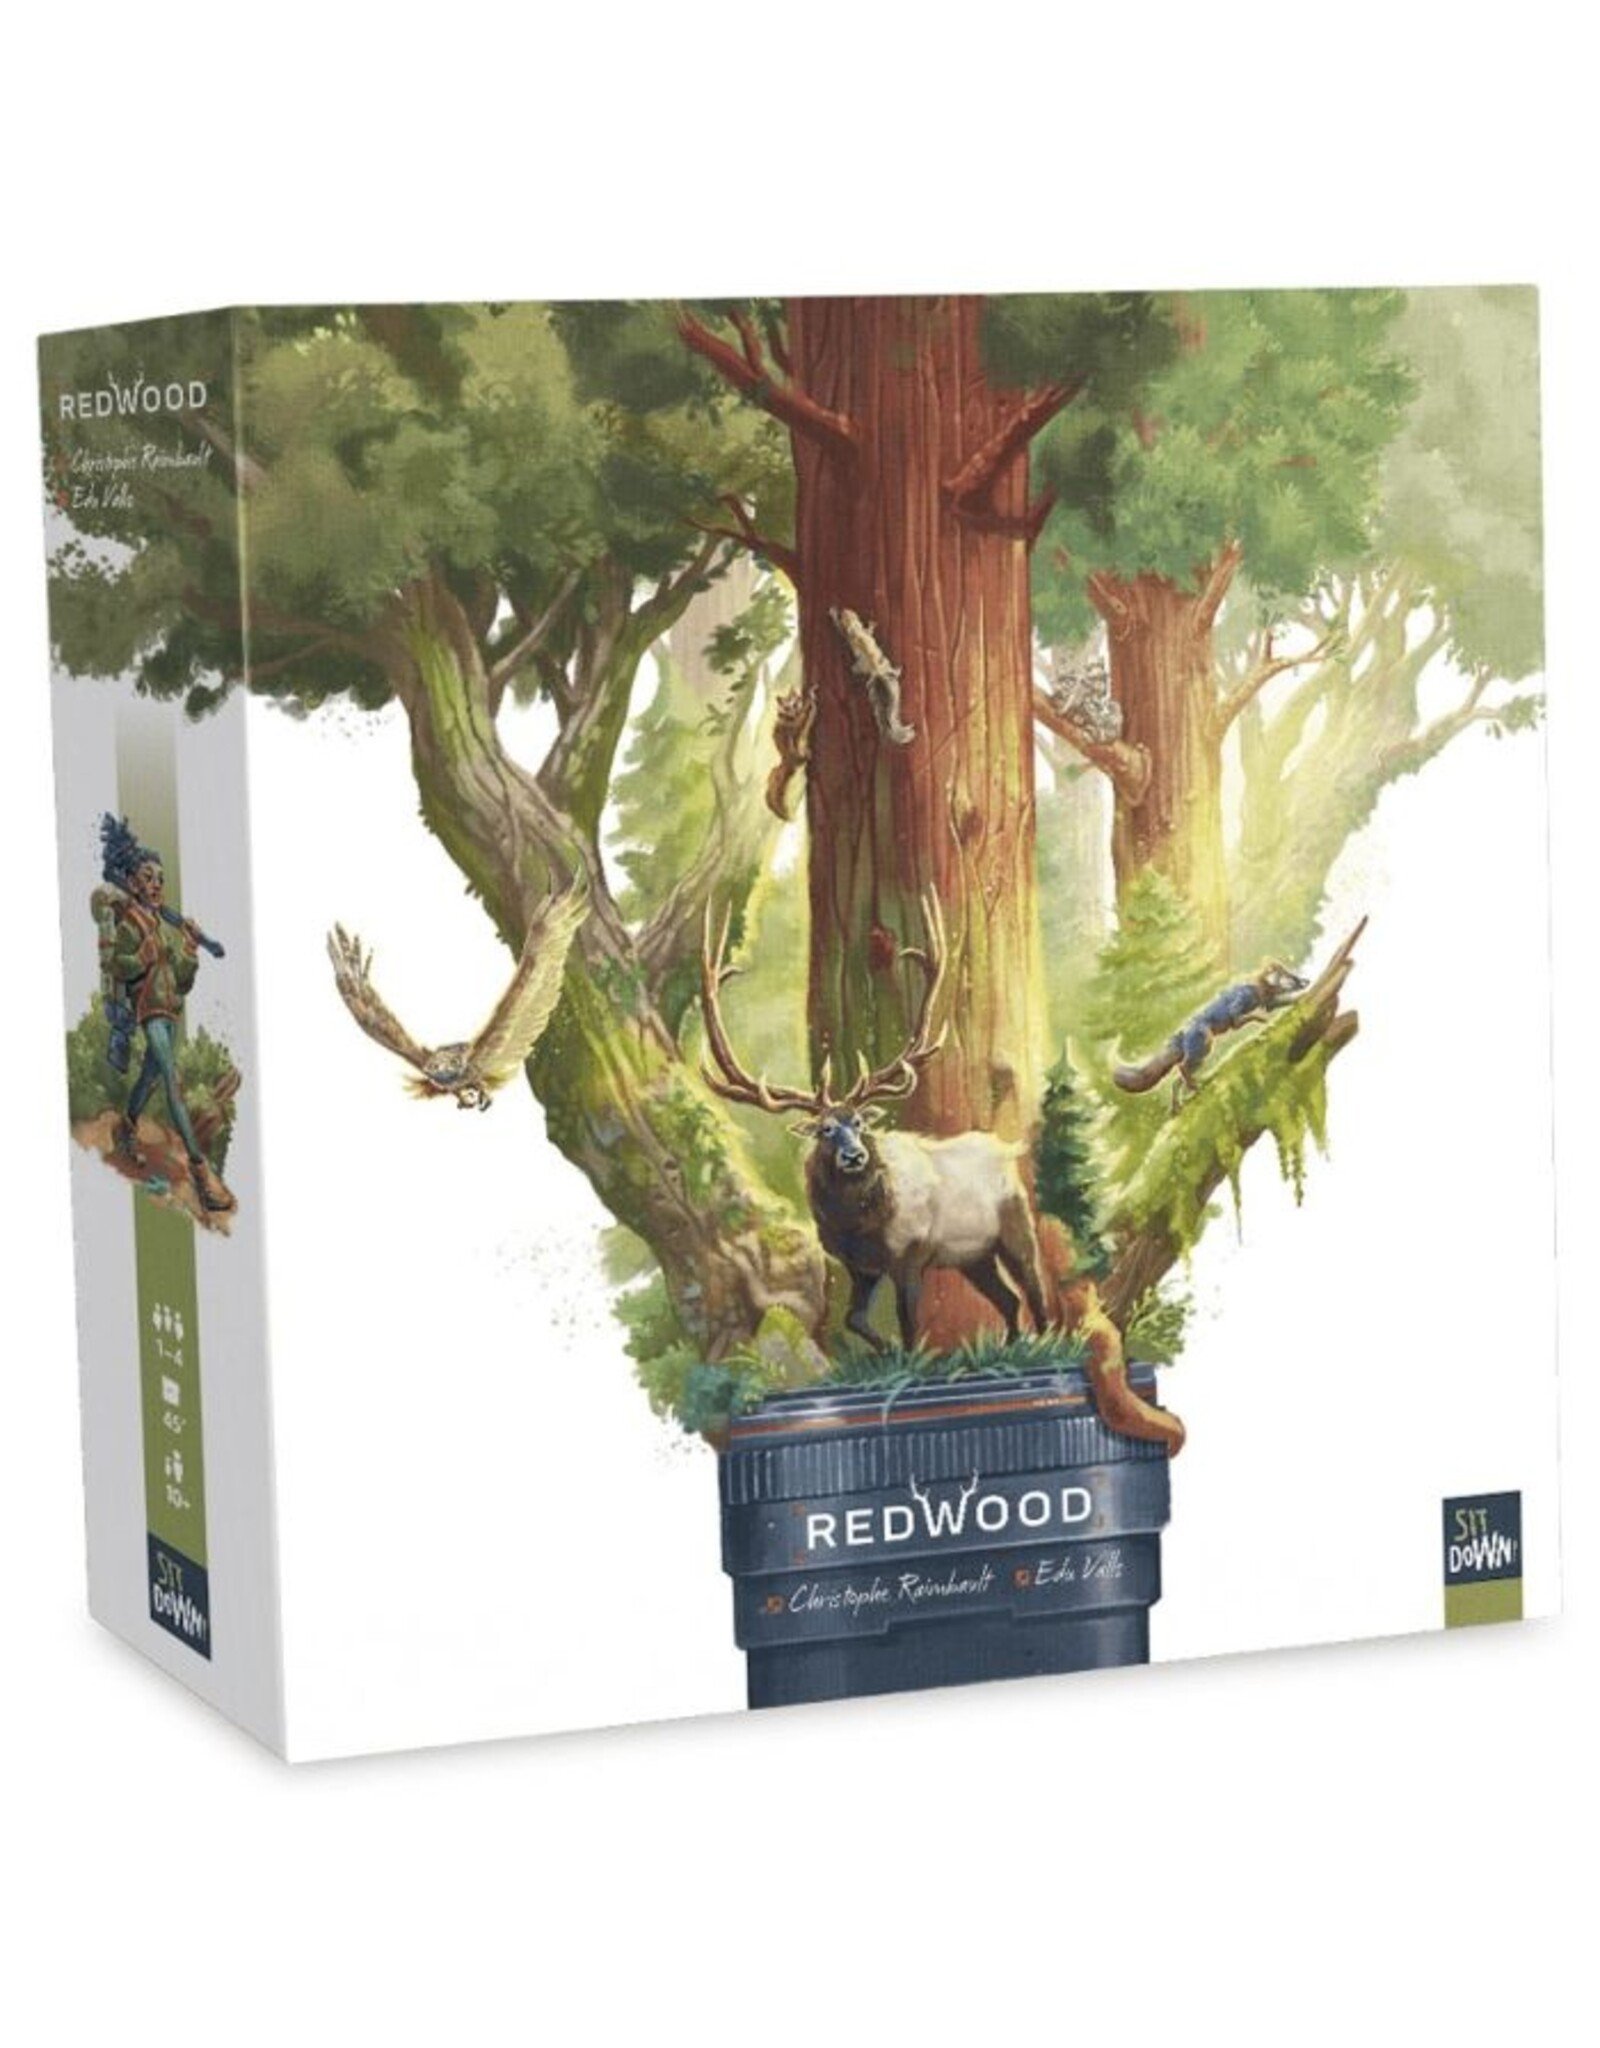 Redwood Retail Edition